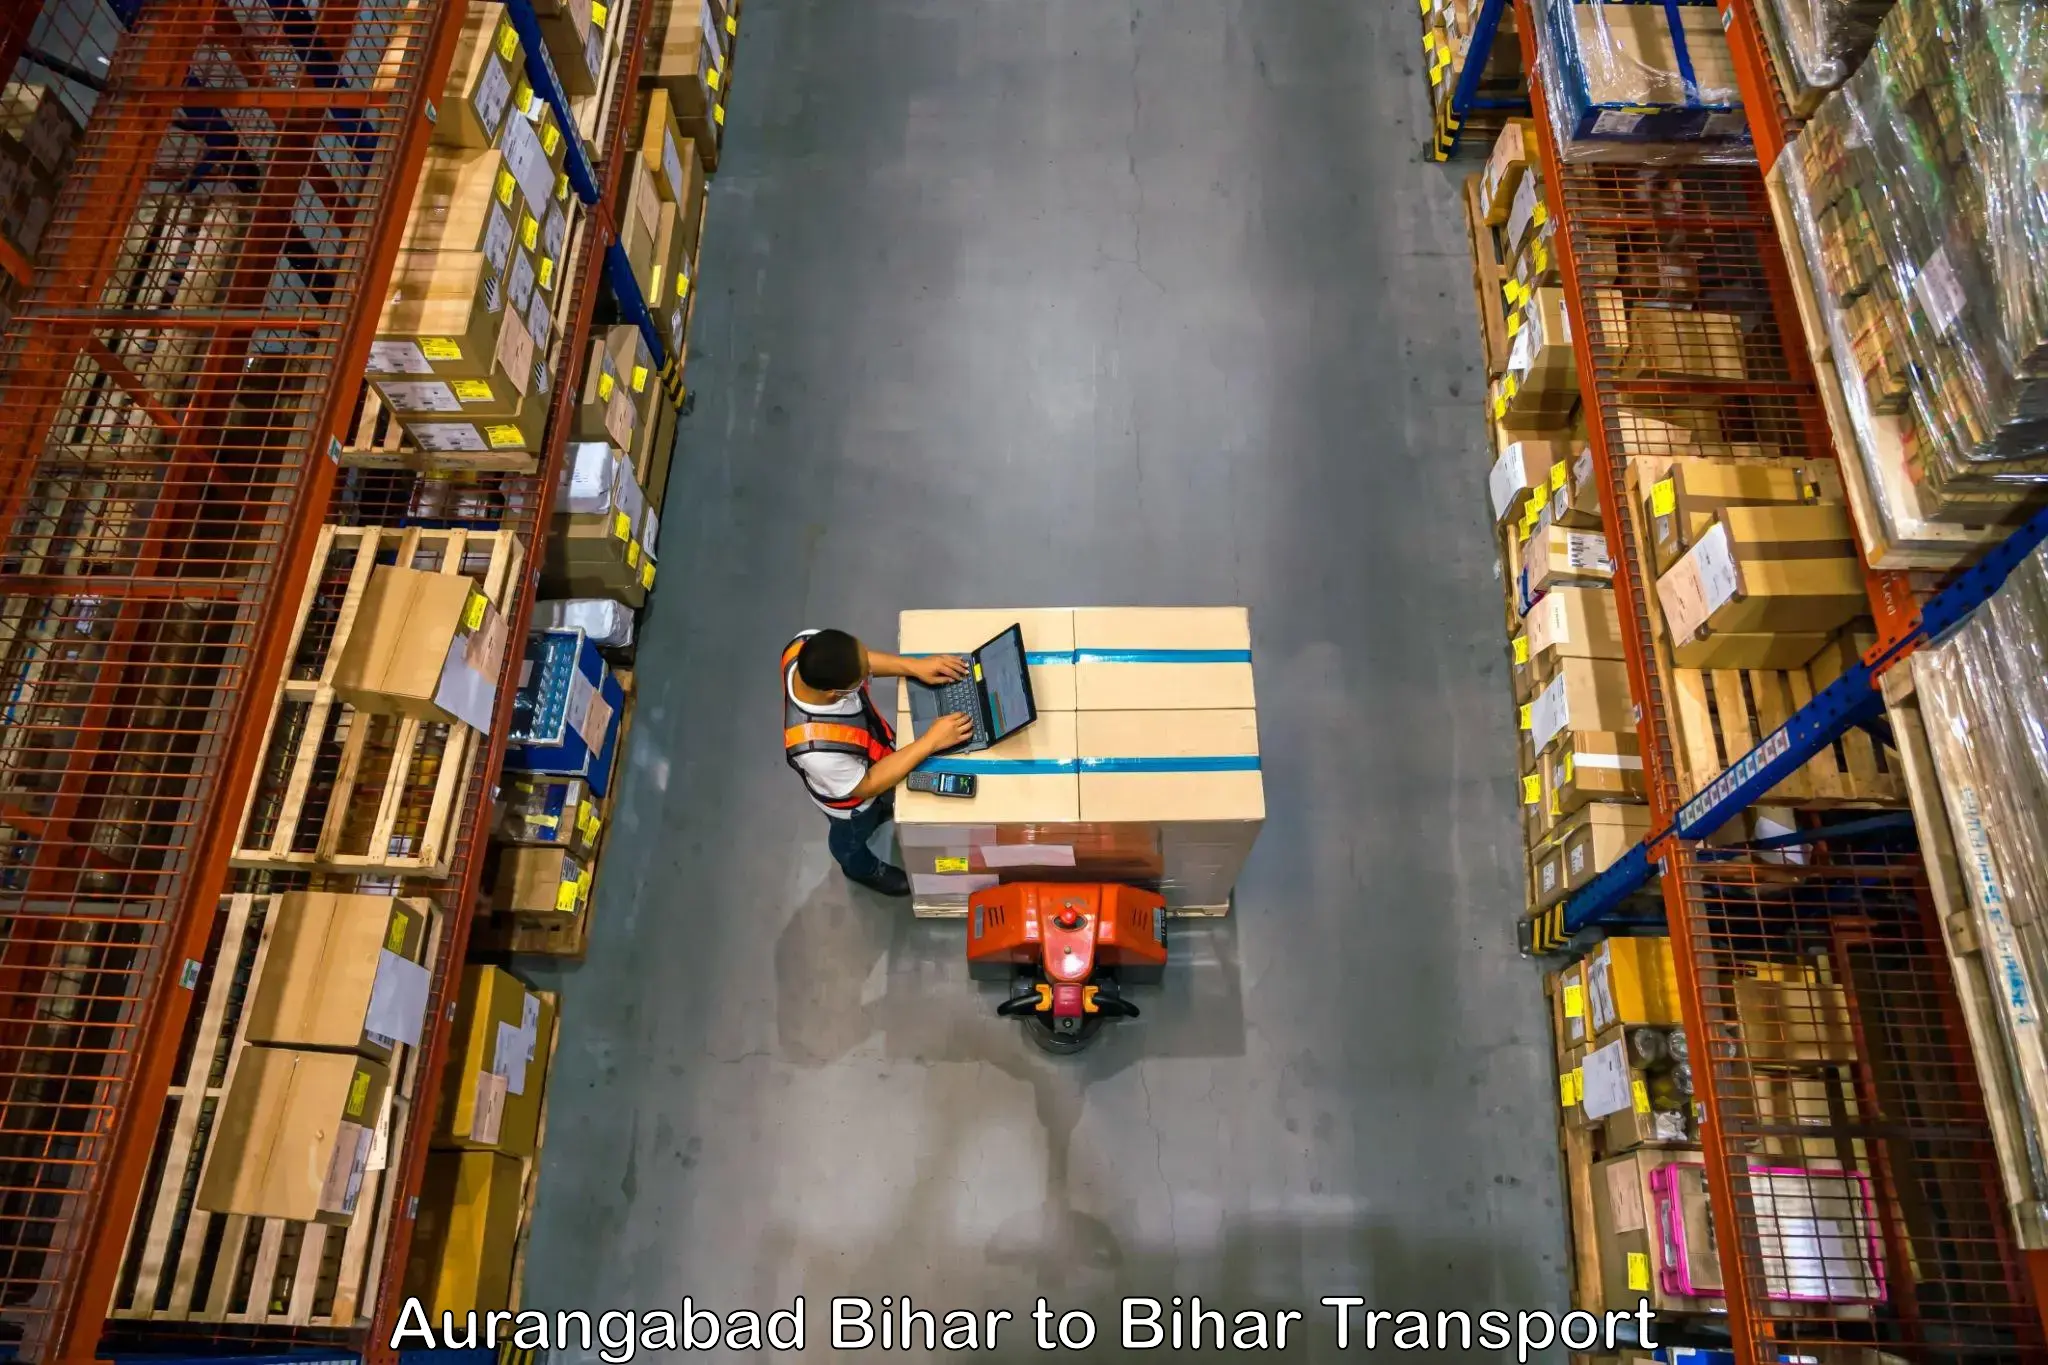 Delivery service Aurangabad Bihar to Samastipur